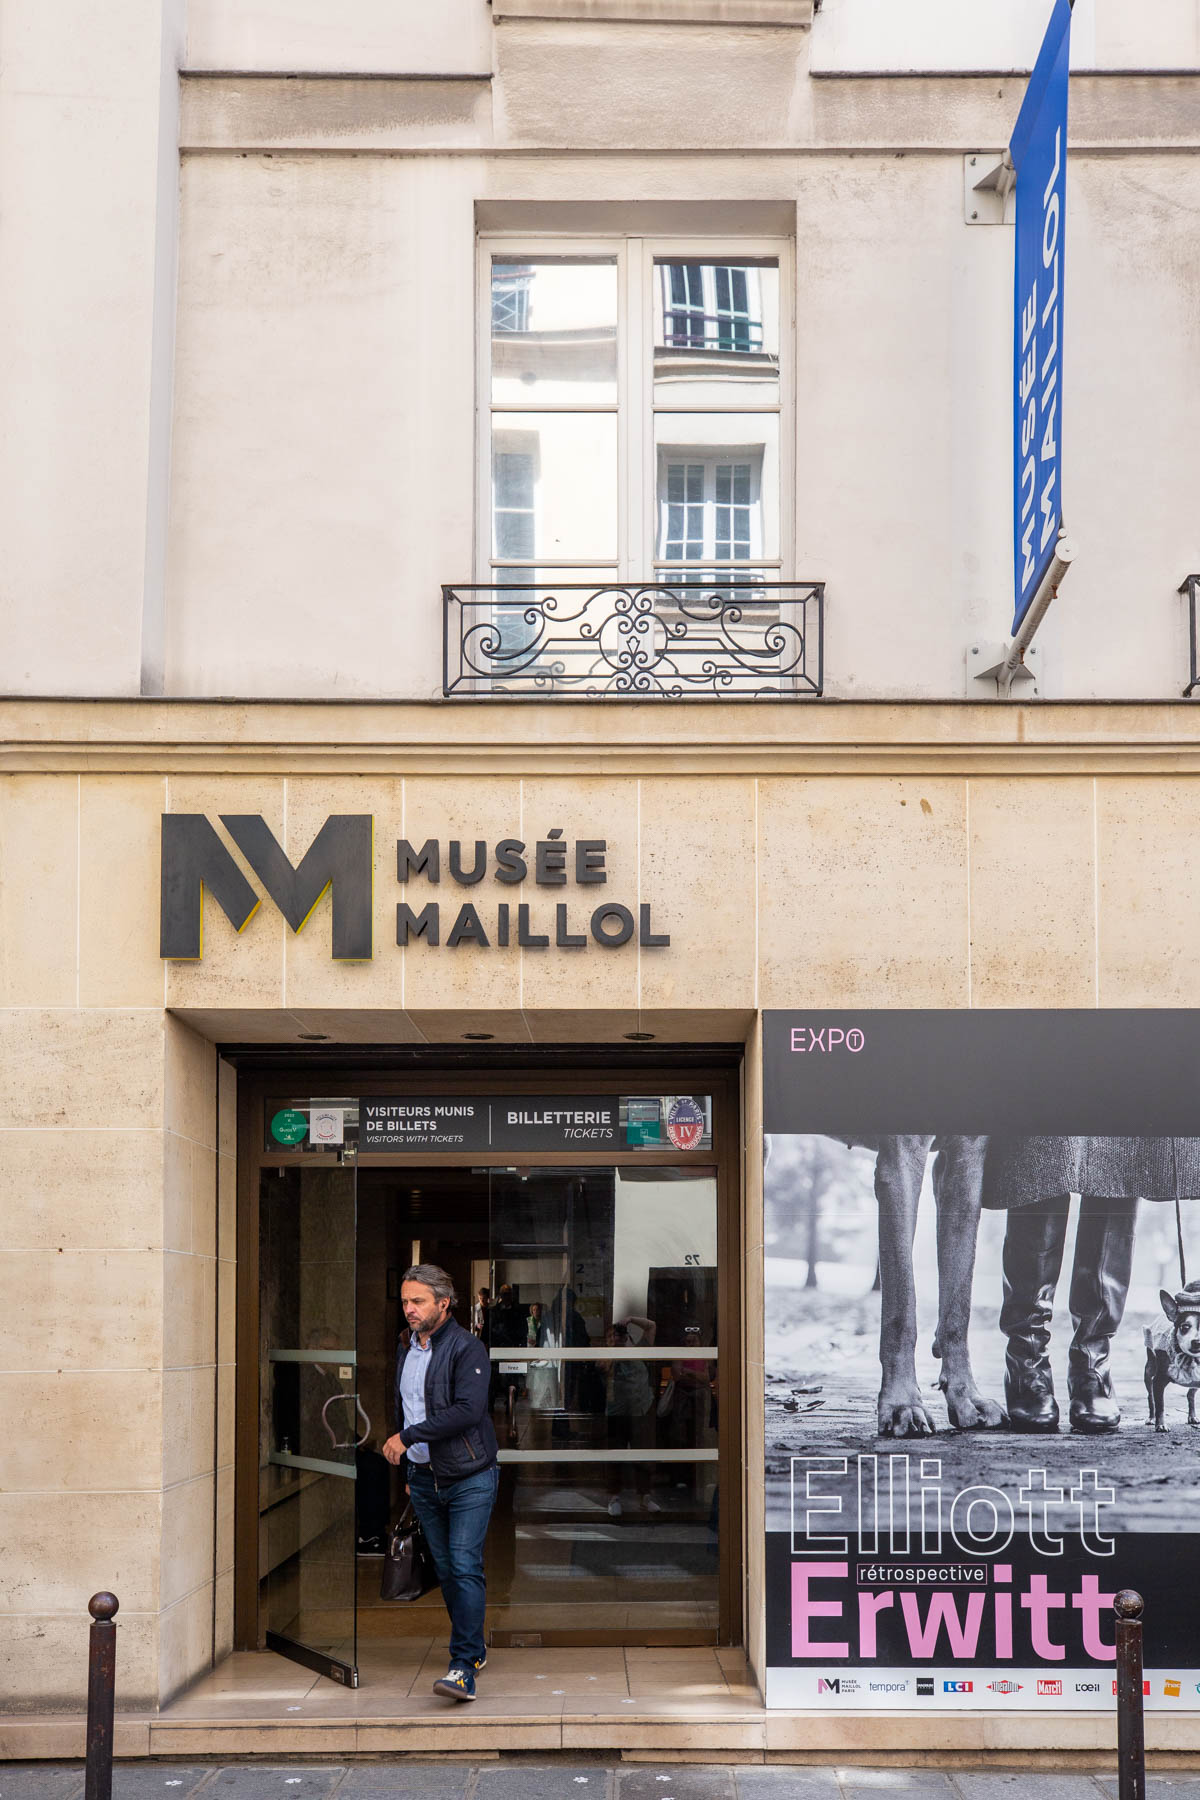 Musee Maillol Exterior Photo
Things to do Saint Germain